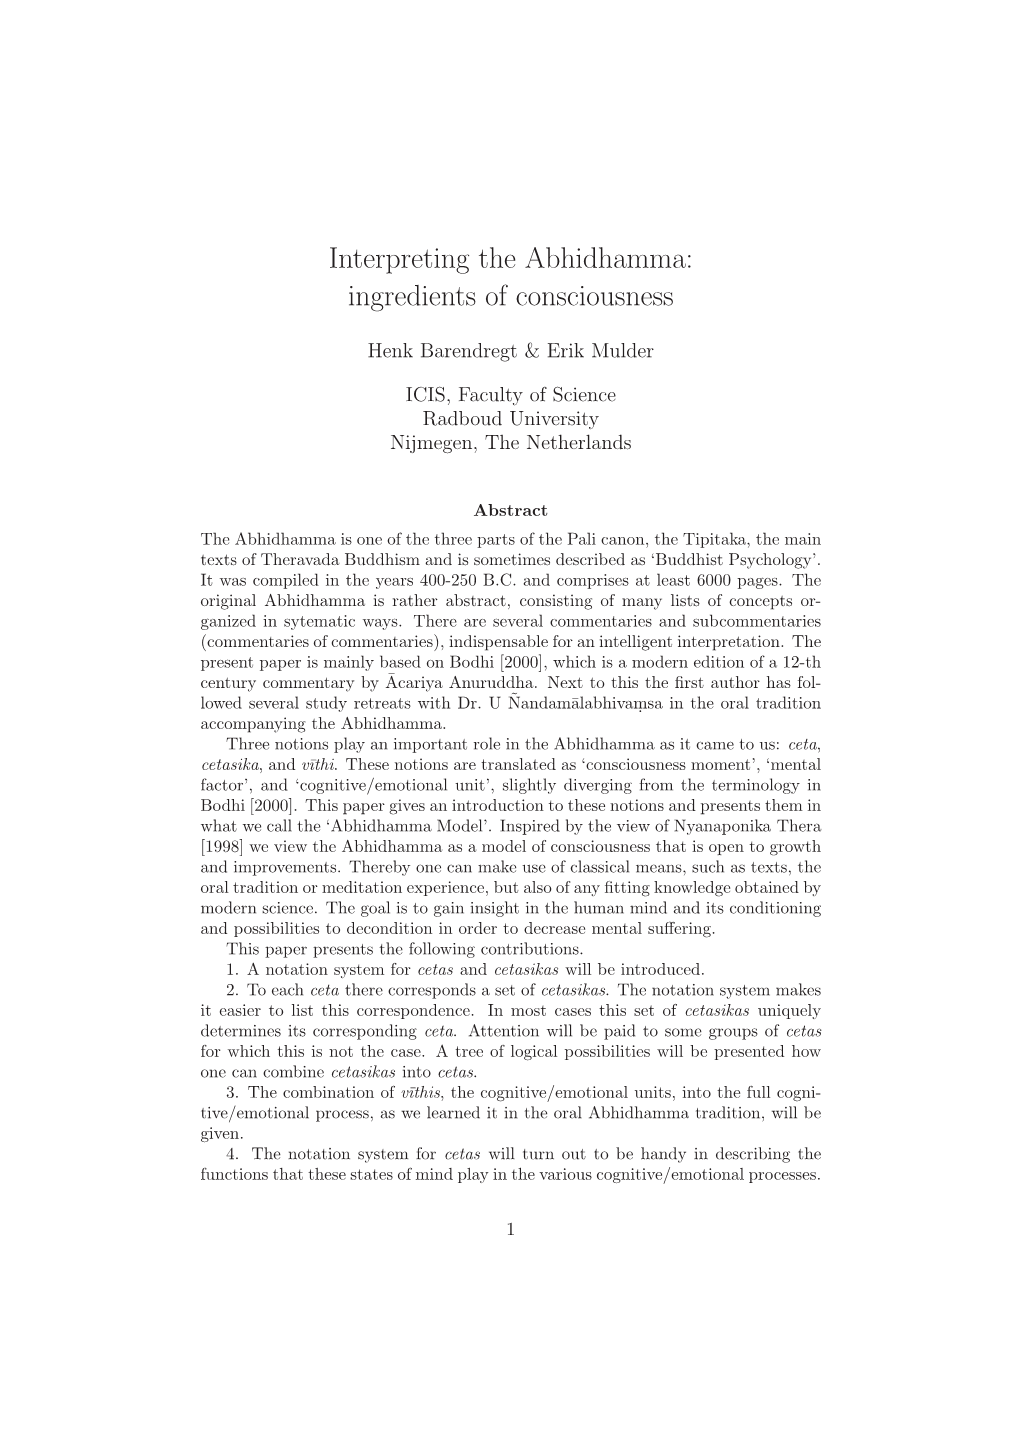 Interpreting the Abhidhamma: Ingredients of Consciousness